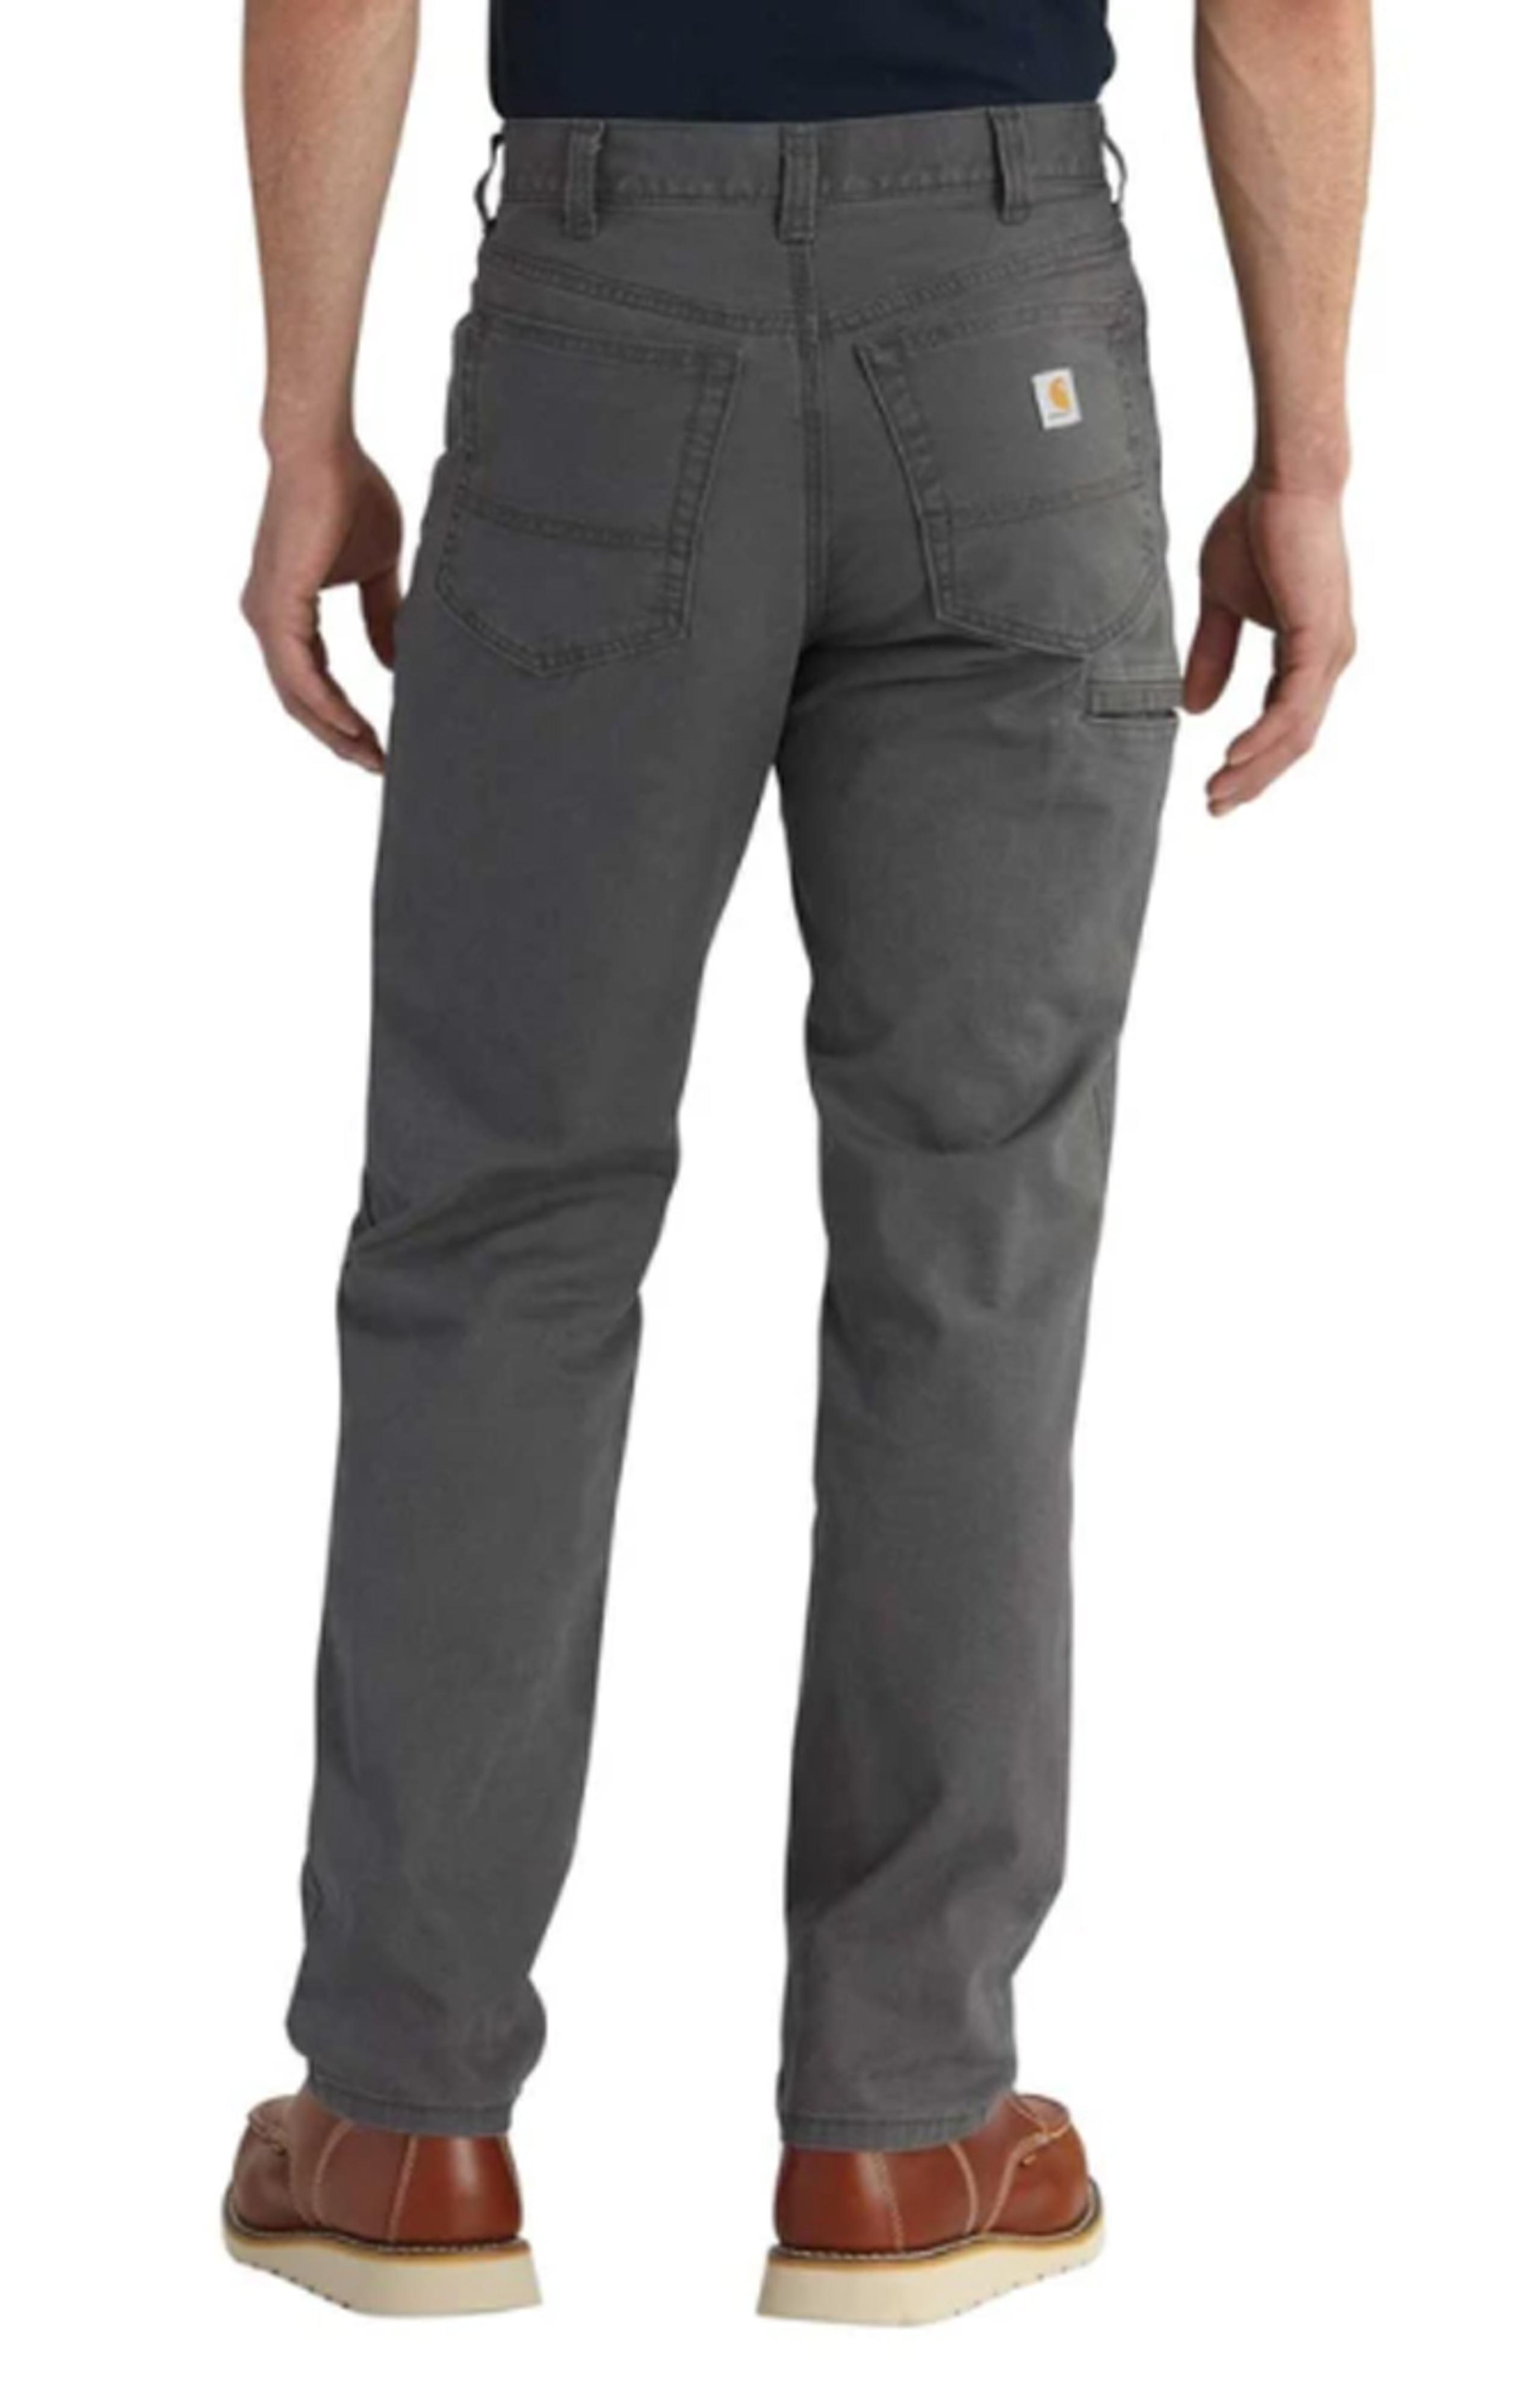 Carhartt Men's Rugged Flex Rigby 5-Pocket Work Pants - Gravel